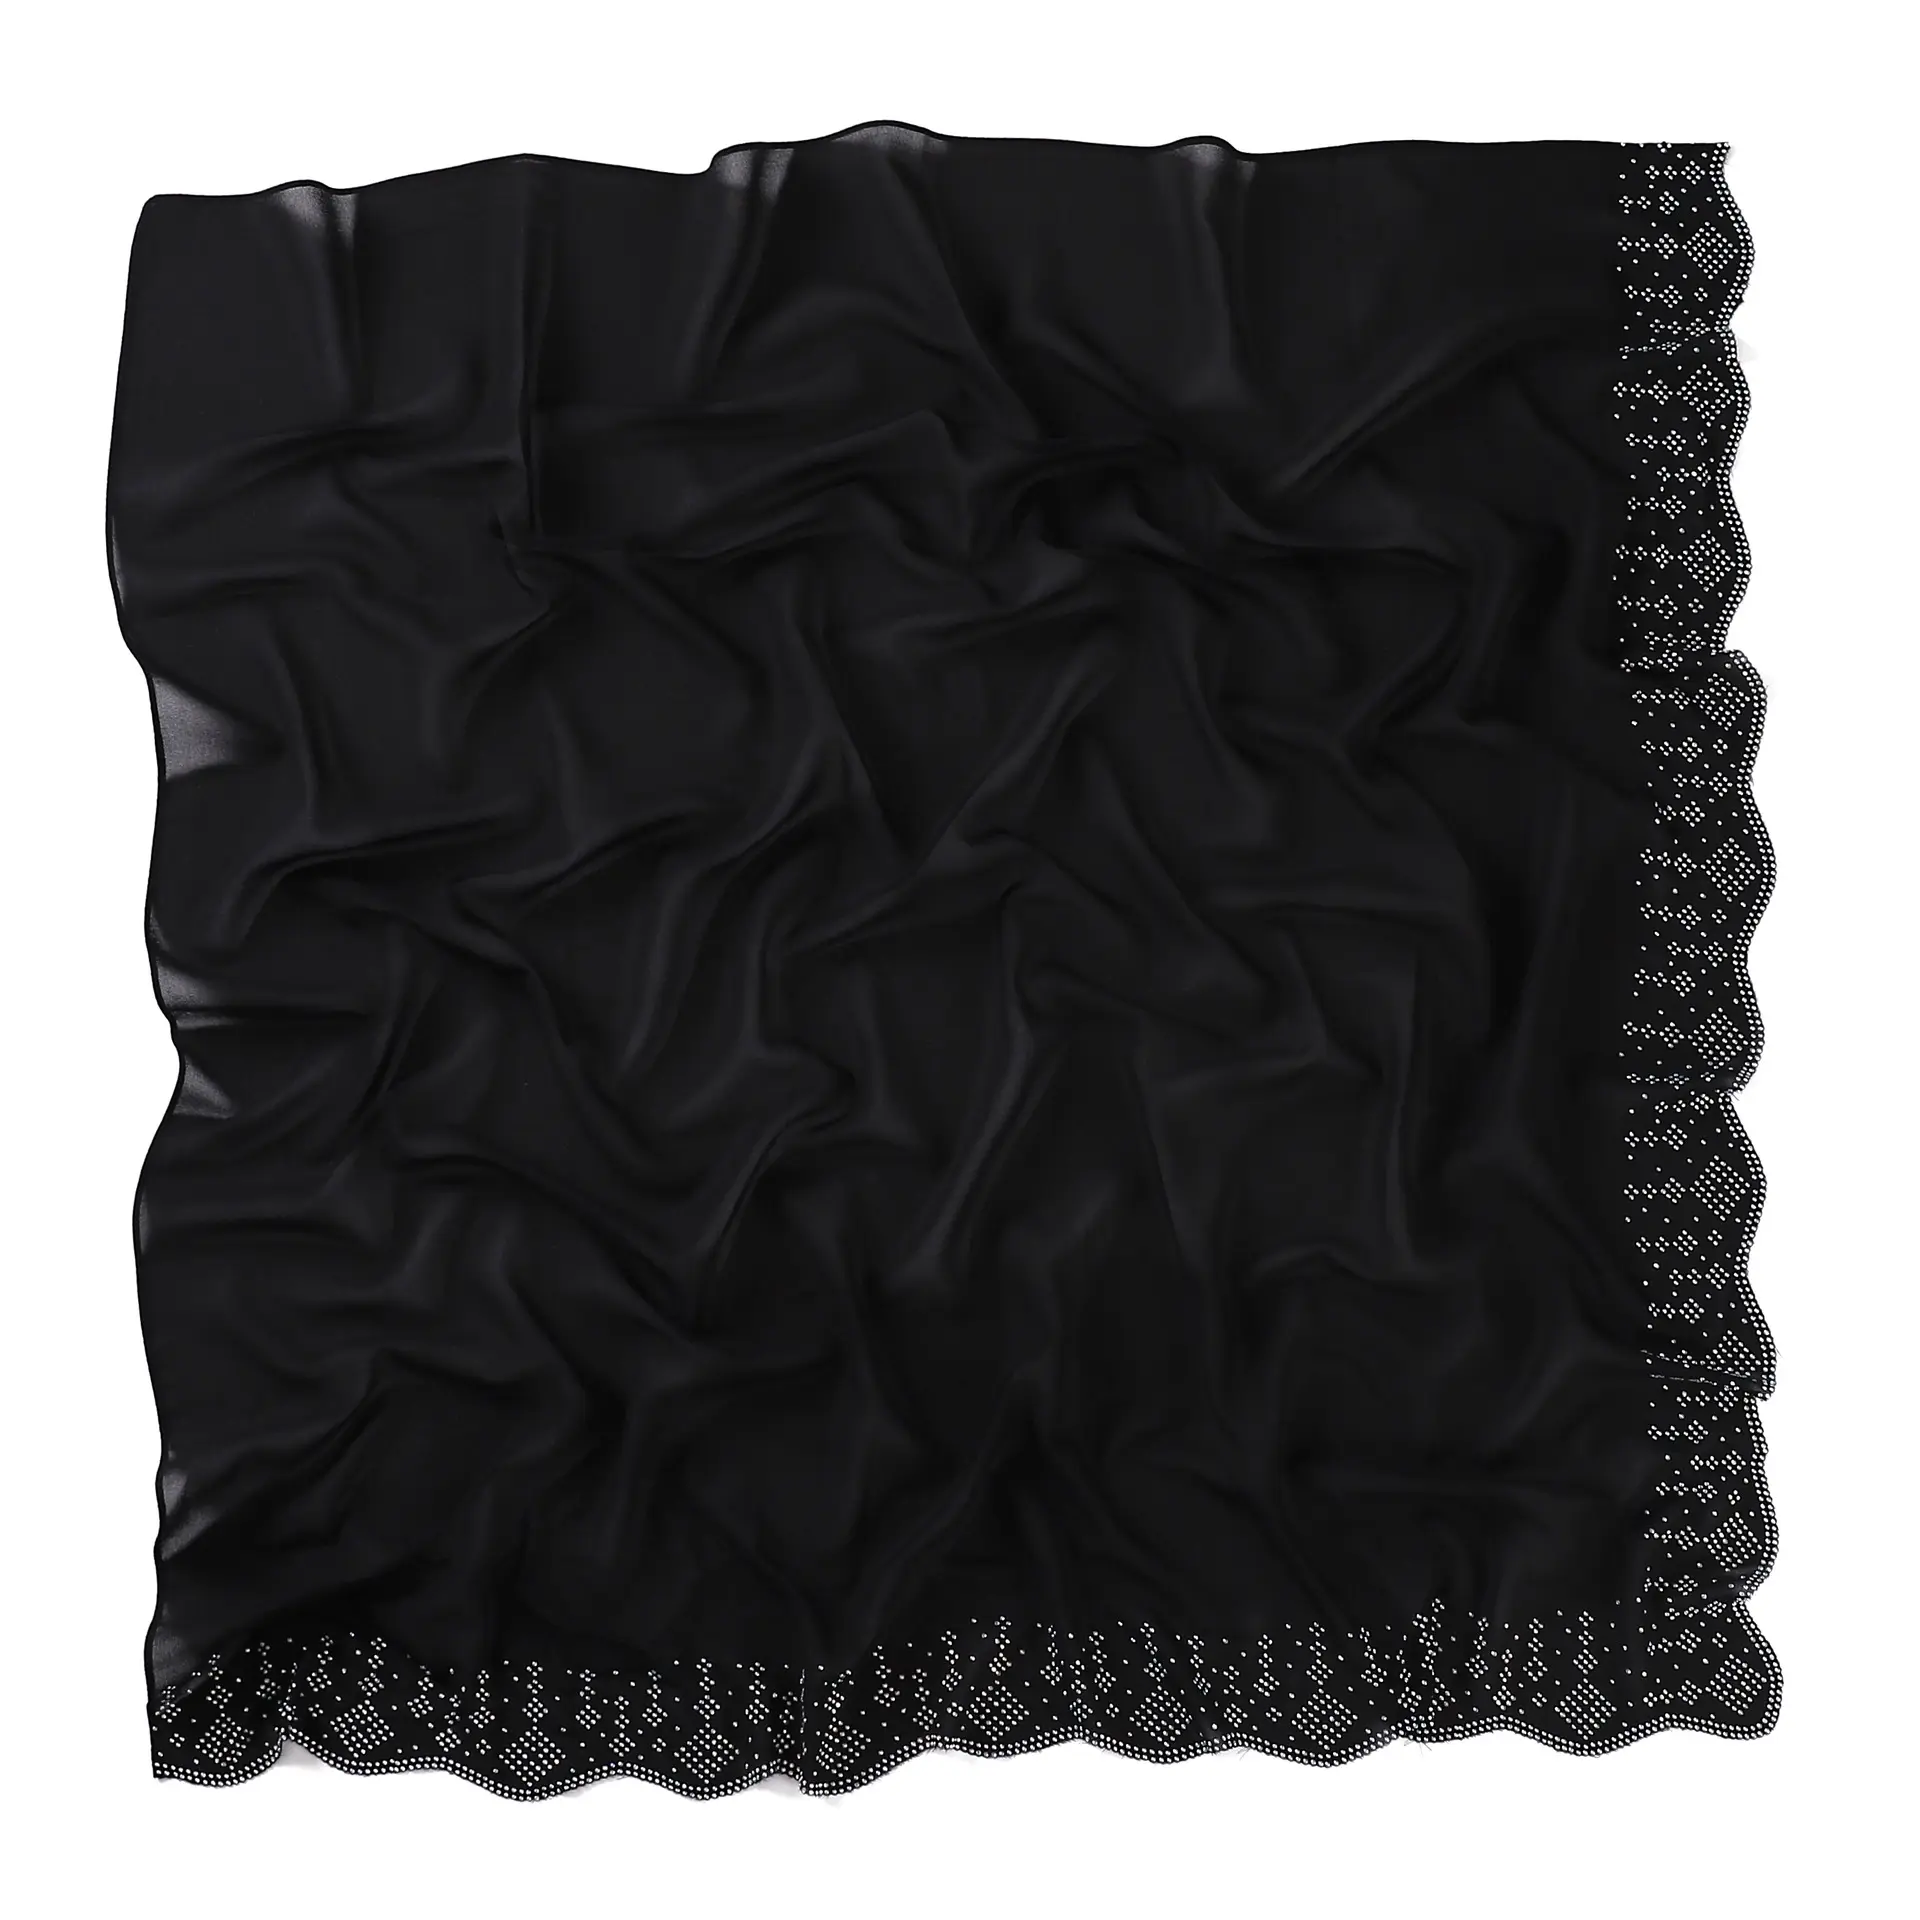 Schlussverkauf Damen-Sonnenschutz schwarz Spitzenprägung Diamanten solide Farbe Chiffon Vierkant-Schal 90*90 cm Dubai-Kopfschal